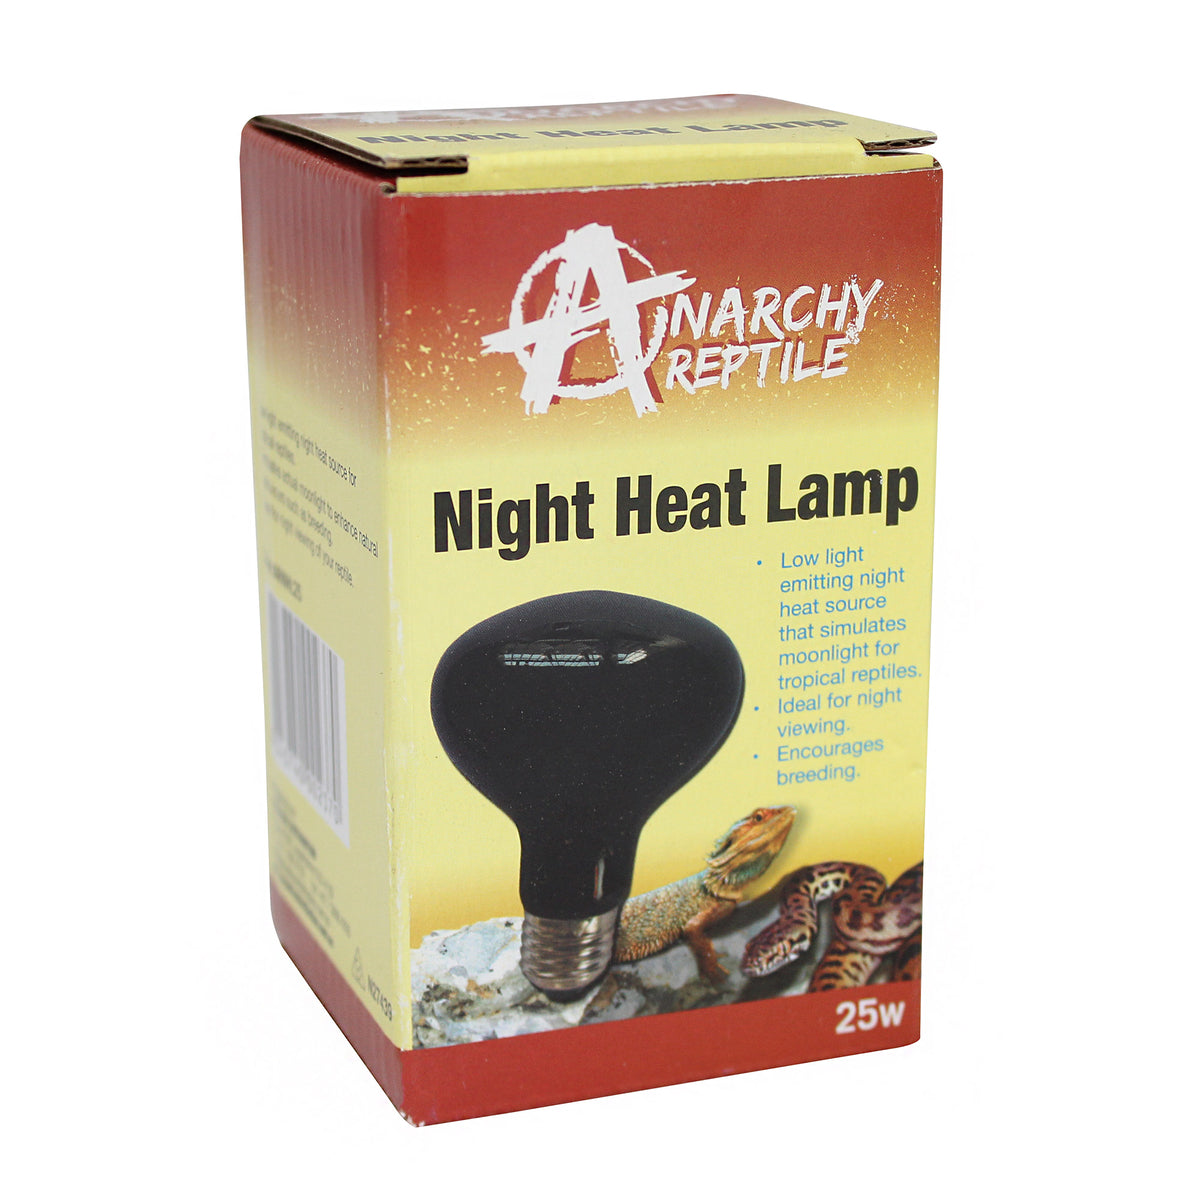 Anarchy Reptile Night Heat Lamp